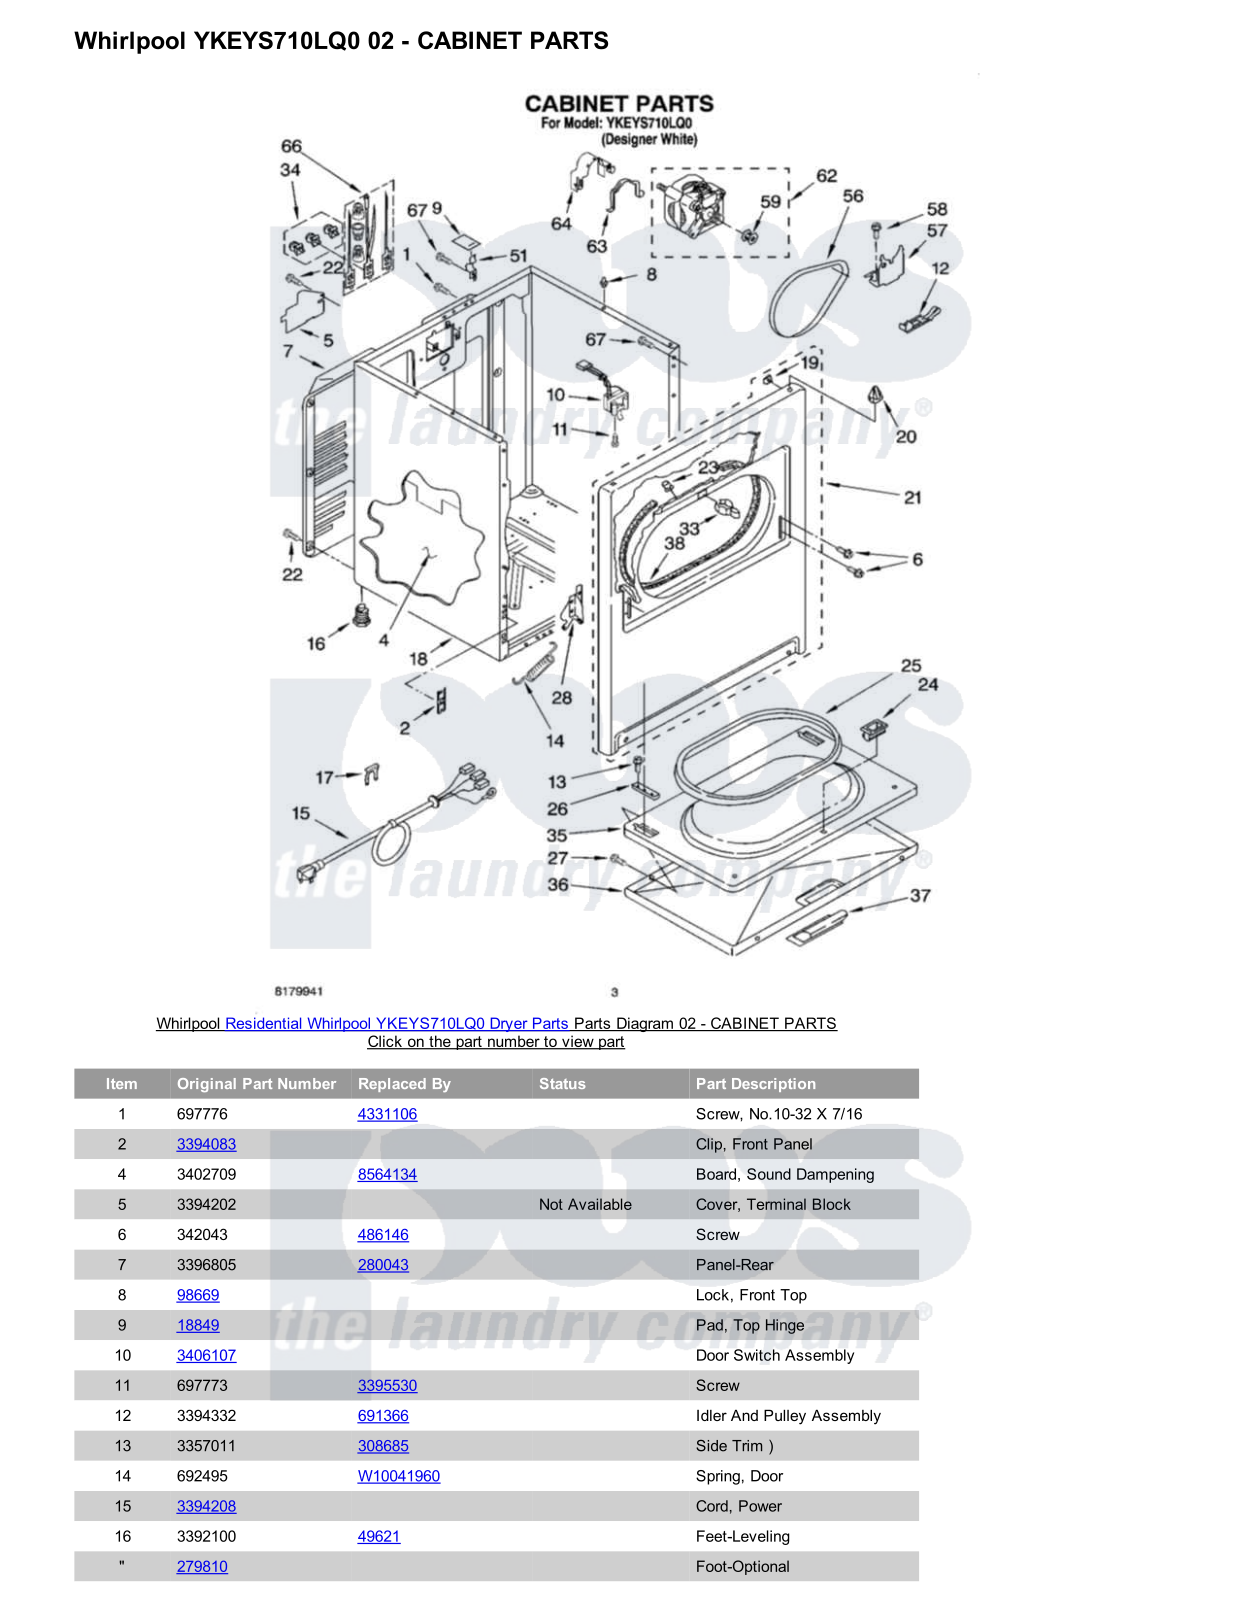 Whirlpool YKEYS710LQ0 Parts Diagram